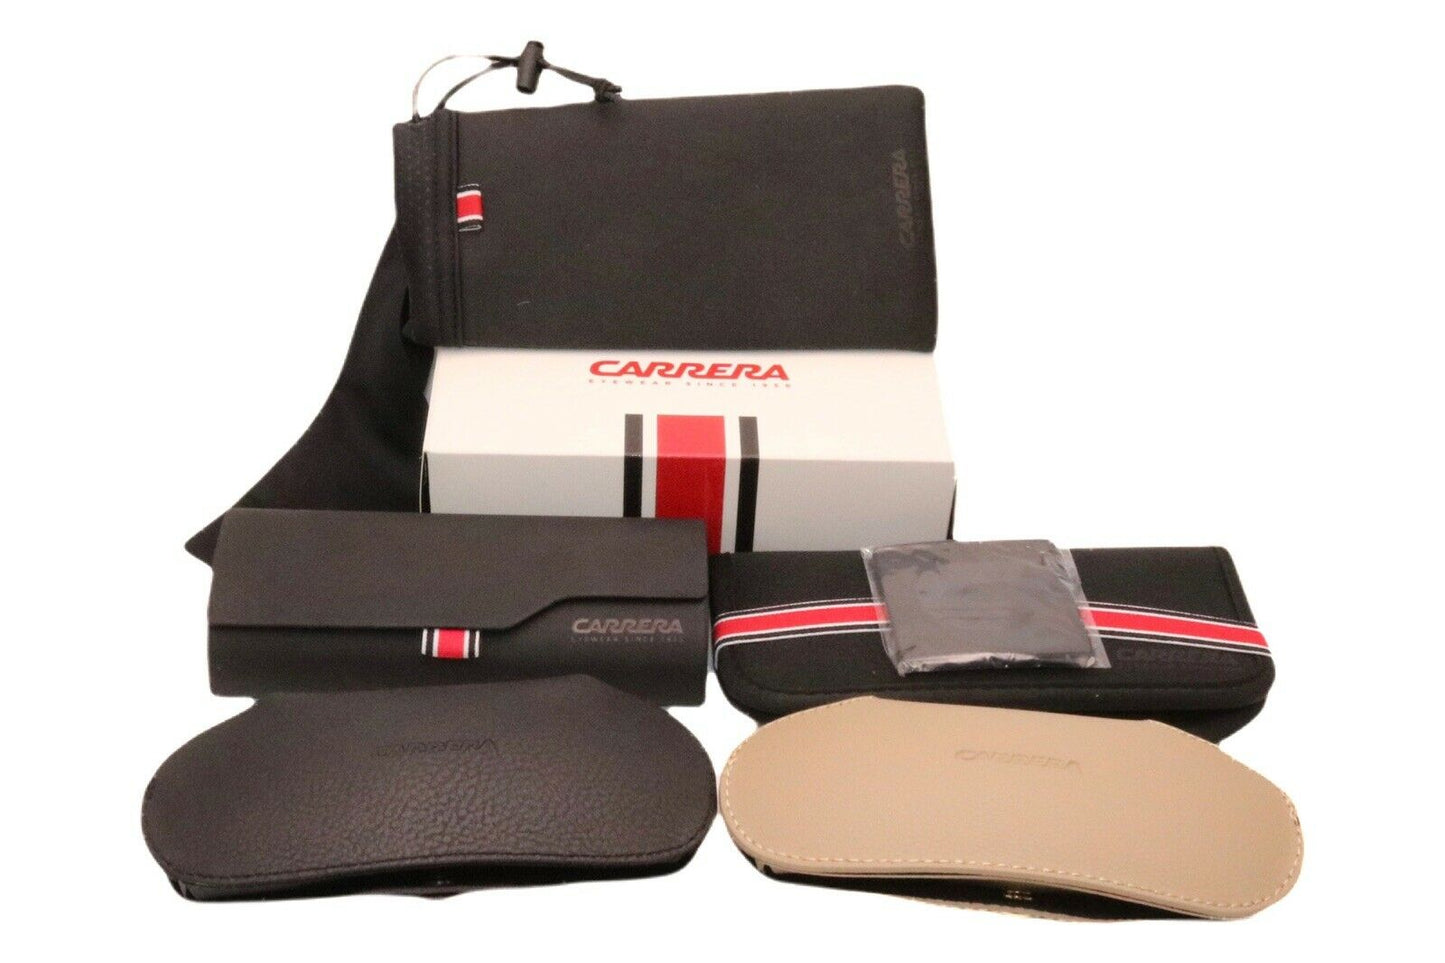 Carrera GIPSY65-0807 WJ 64mm New Sunglasses